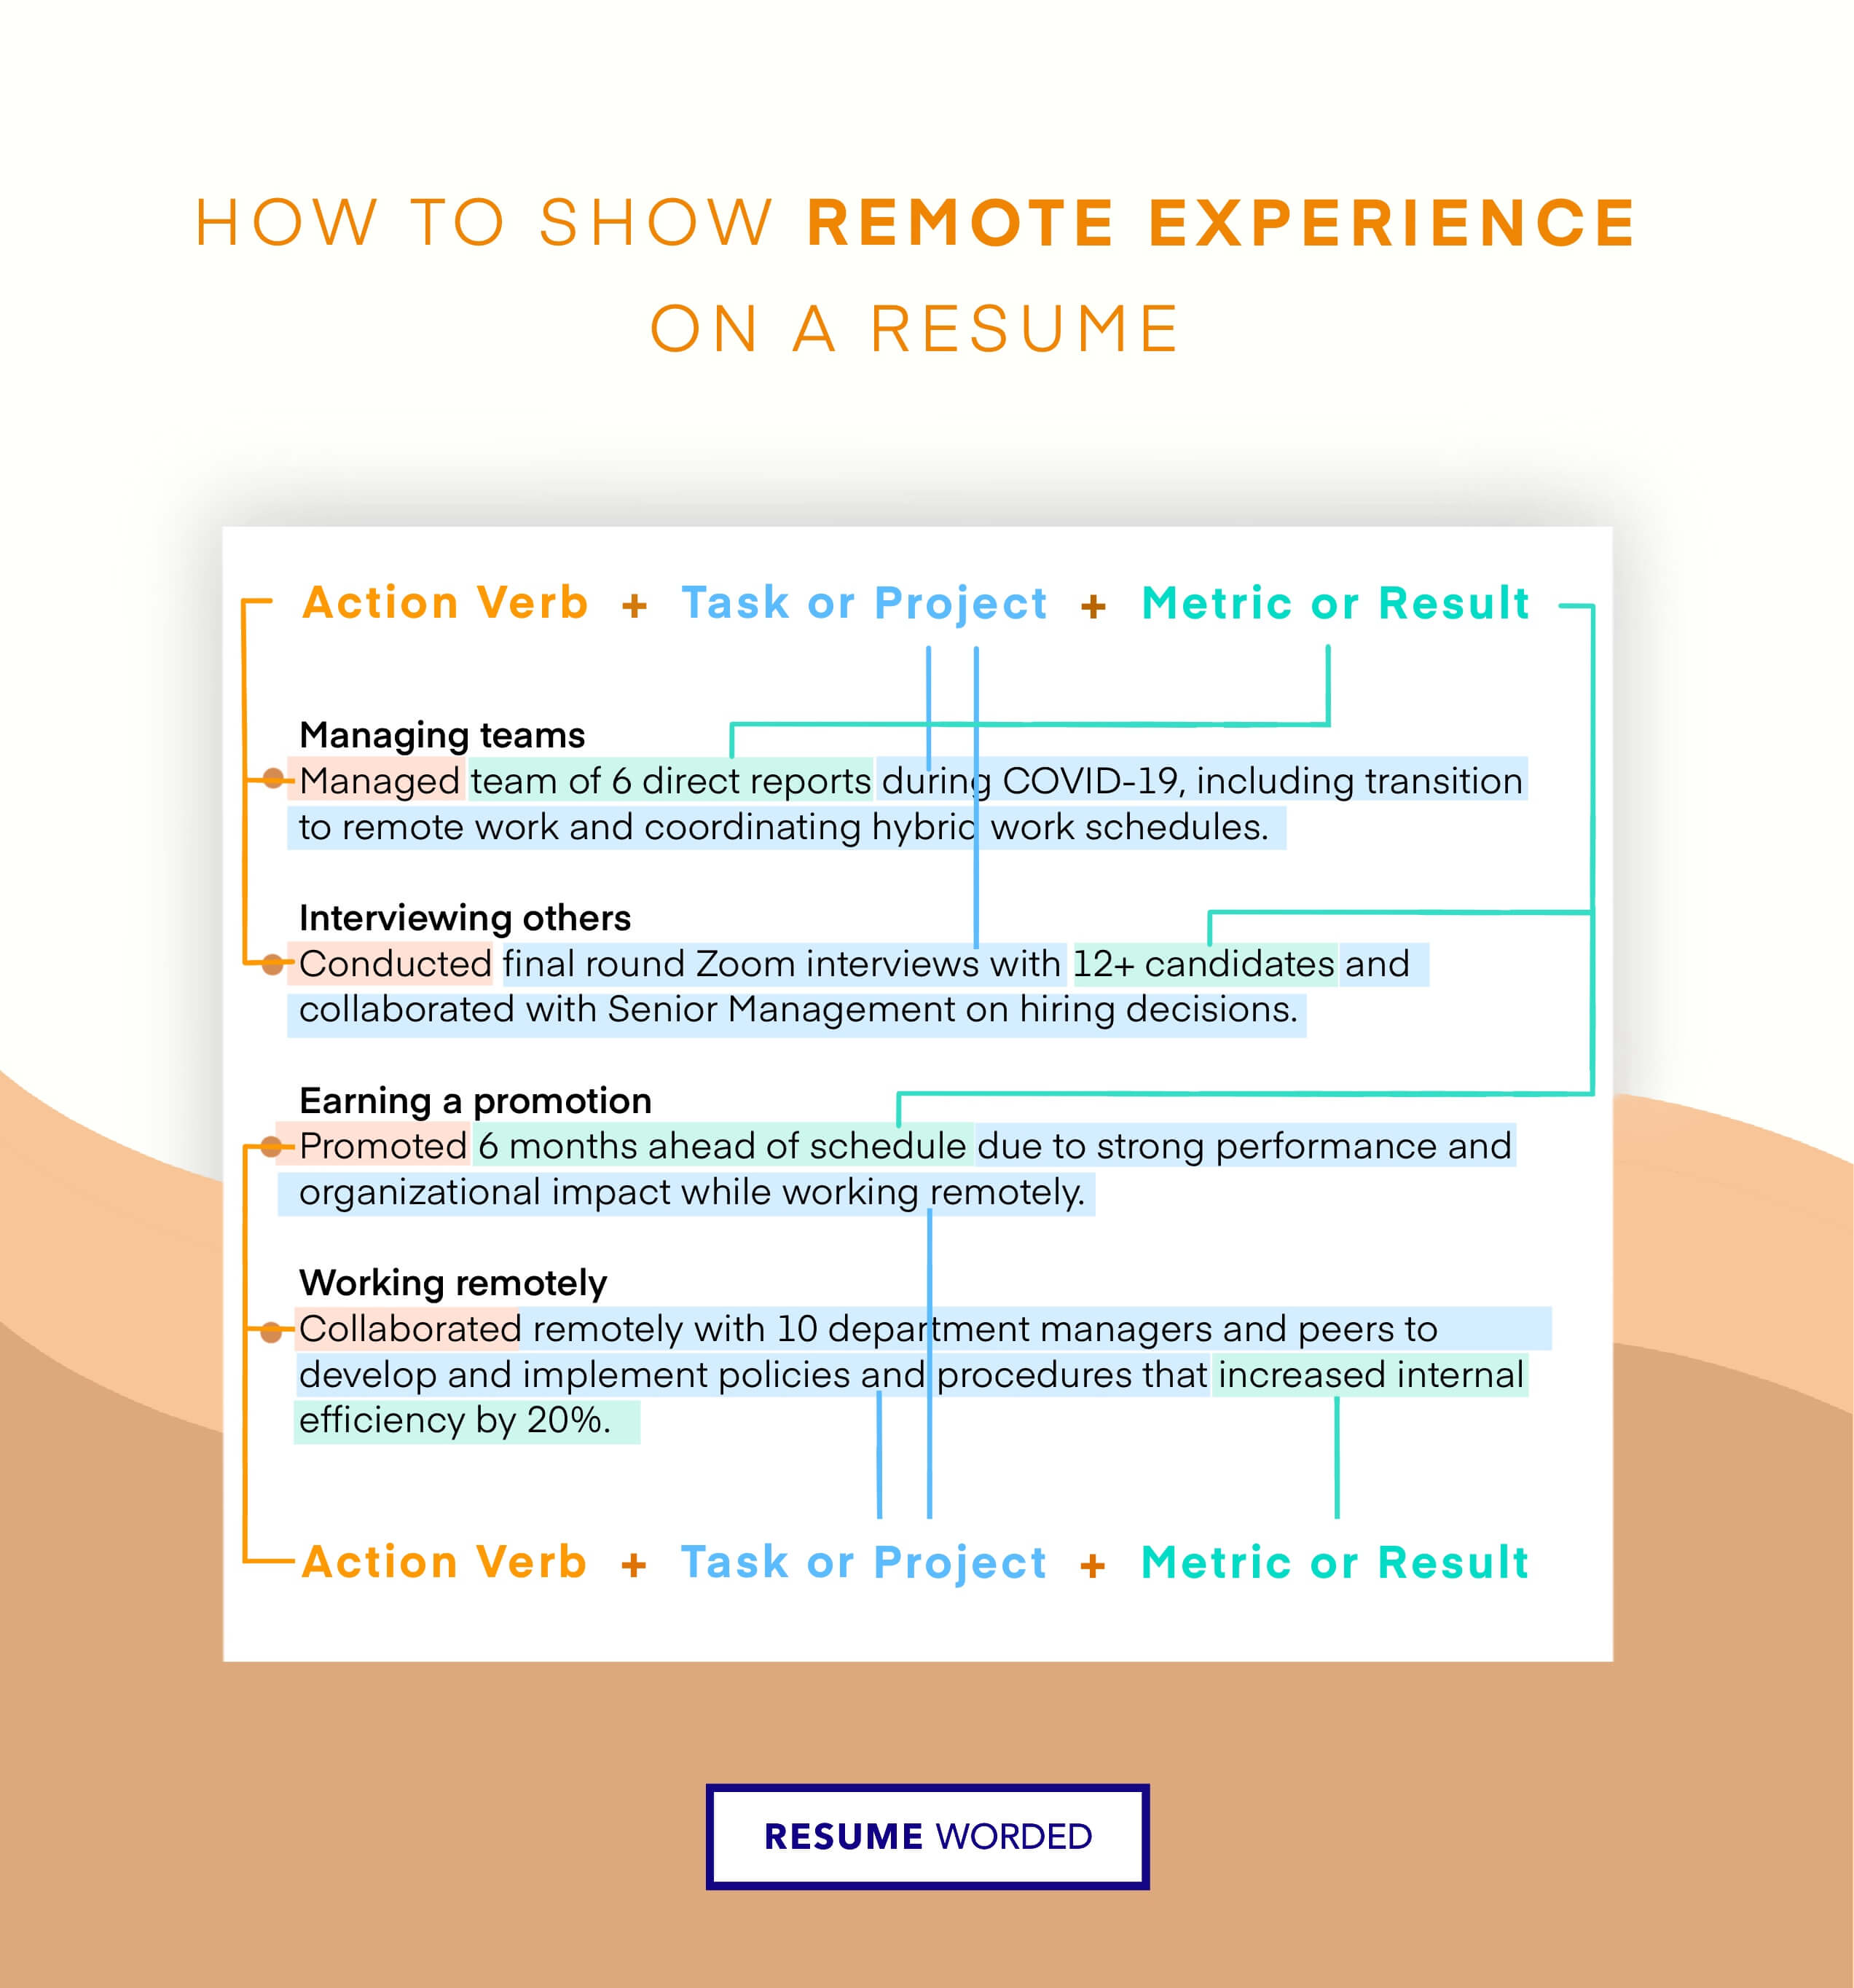 Display your remote communication skills - Remote Nurse CV